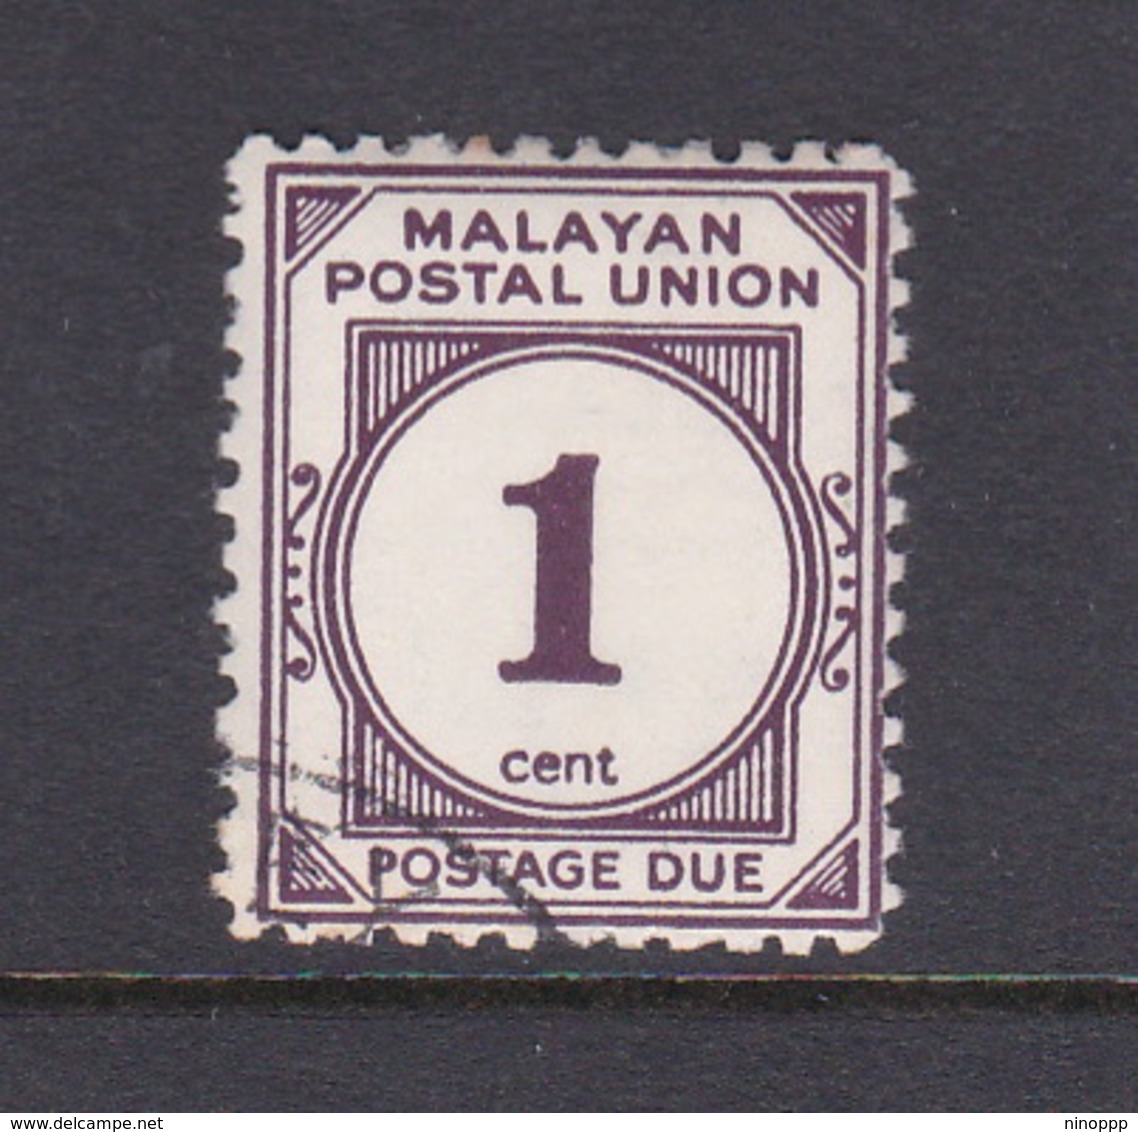 Malayan Postal Union D22a 1965 Postage Due 1c Plum Perf 12,used - Malaya (British Military Administration)